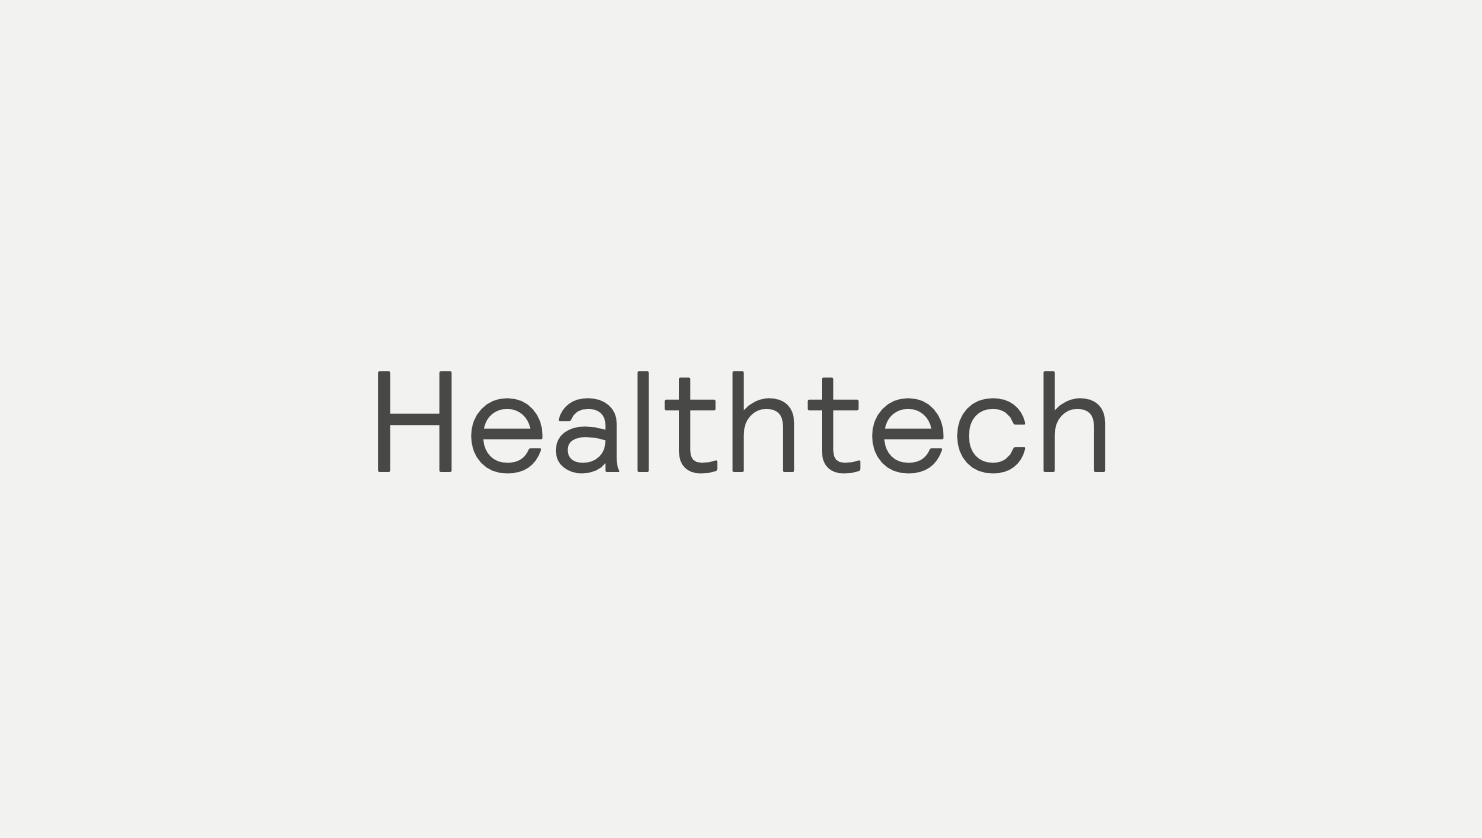 Health tech